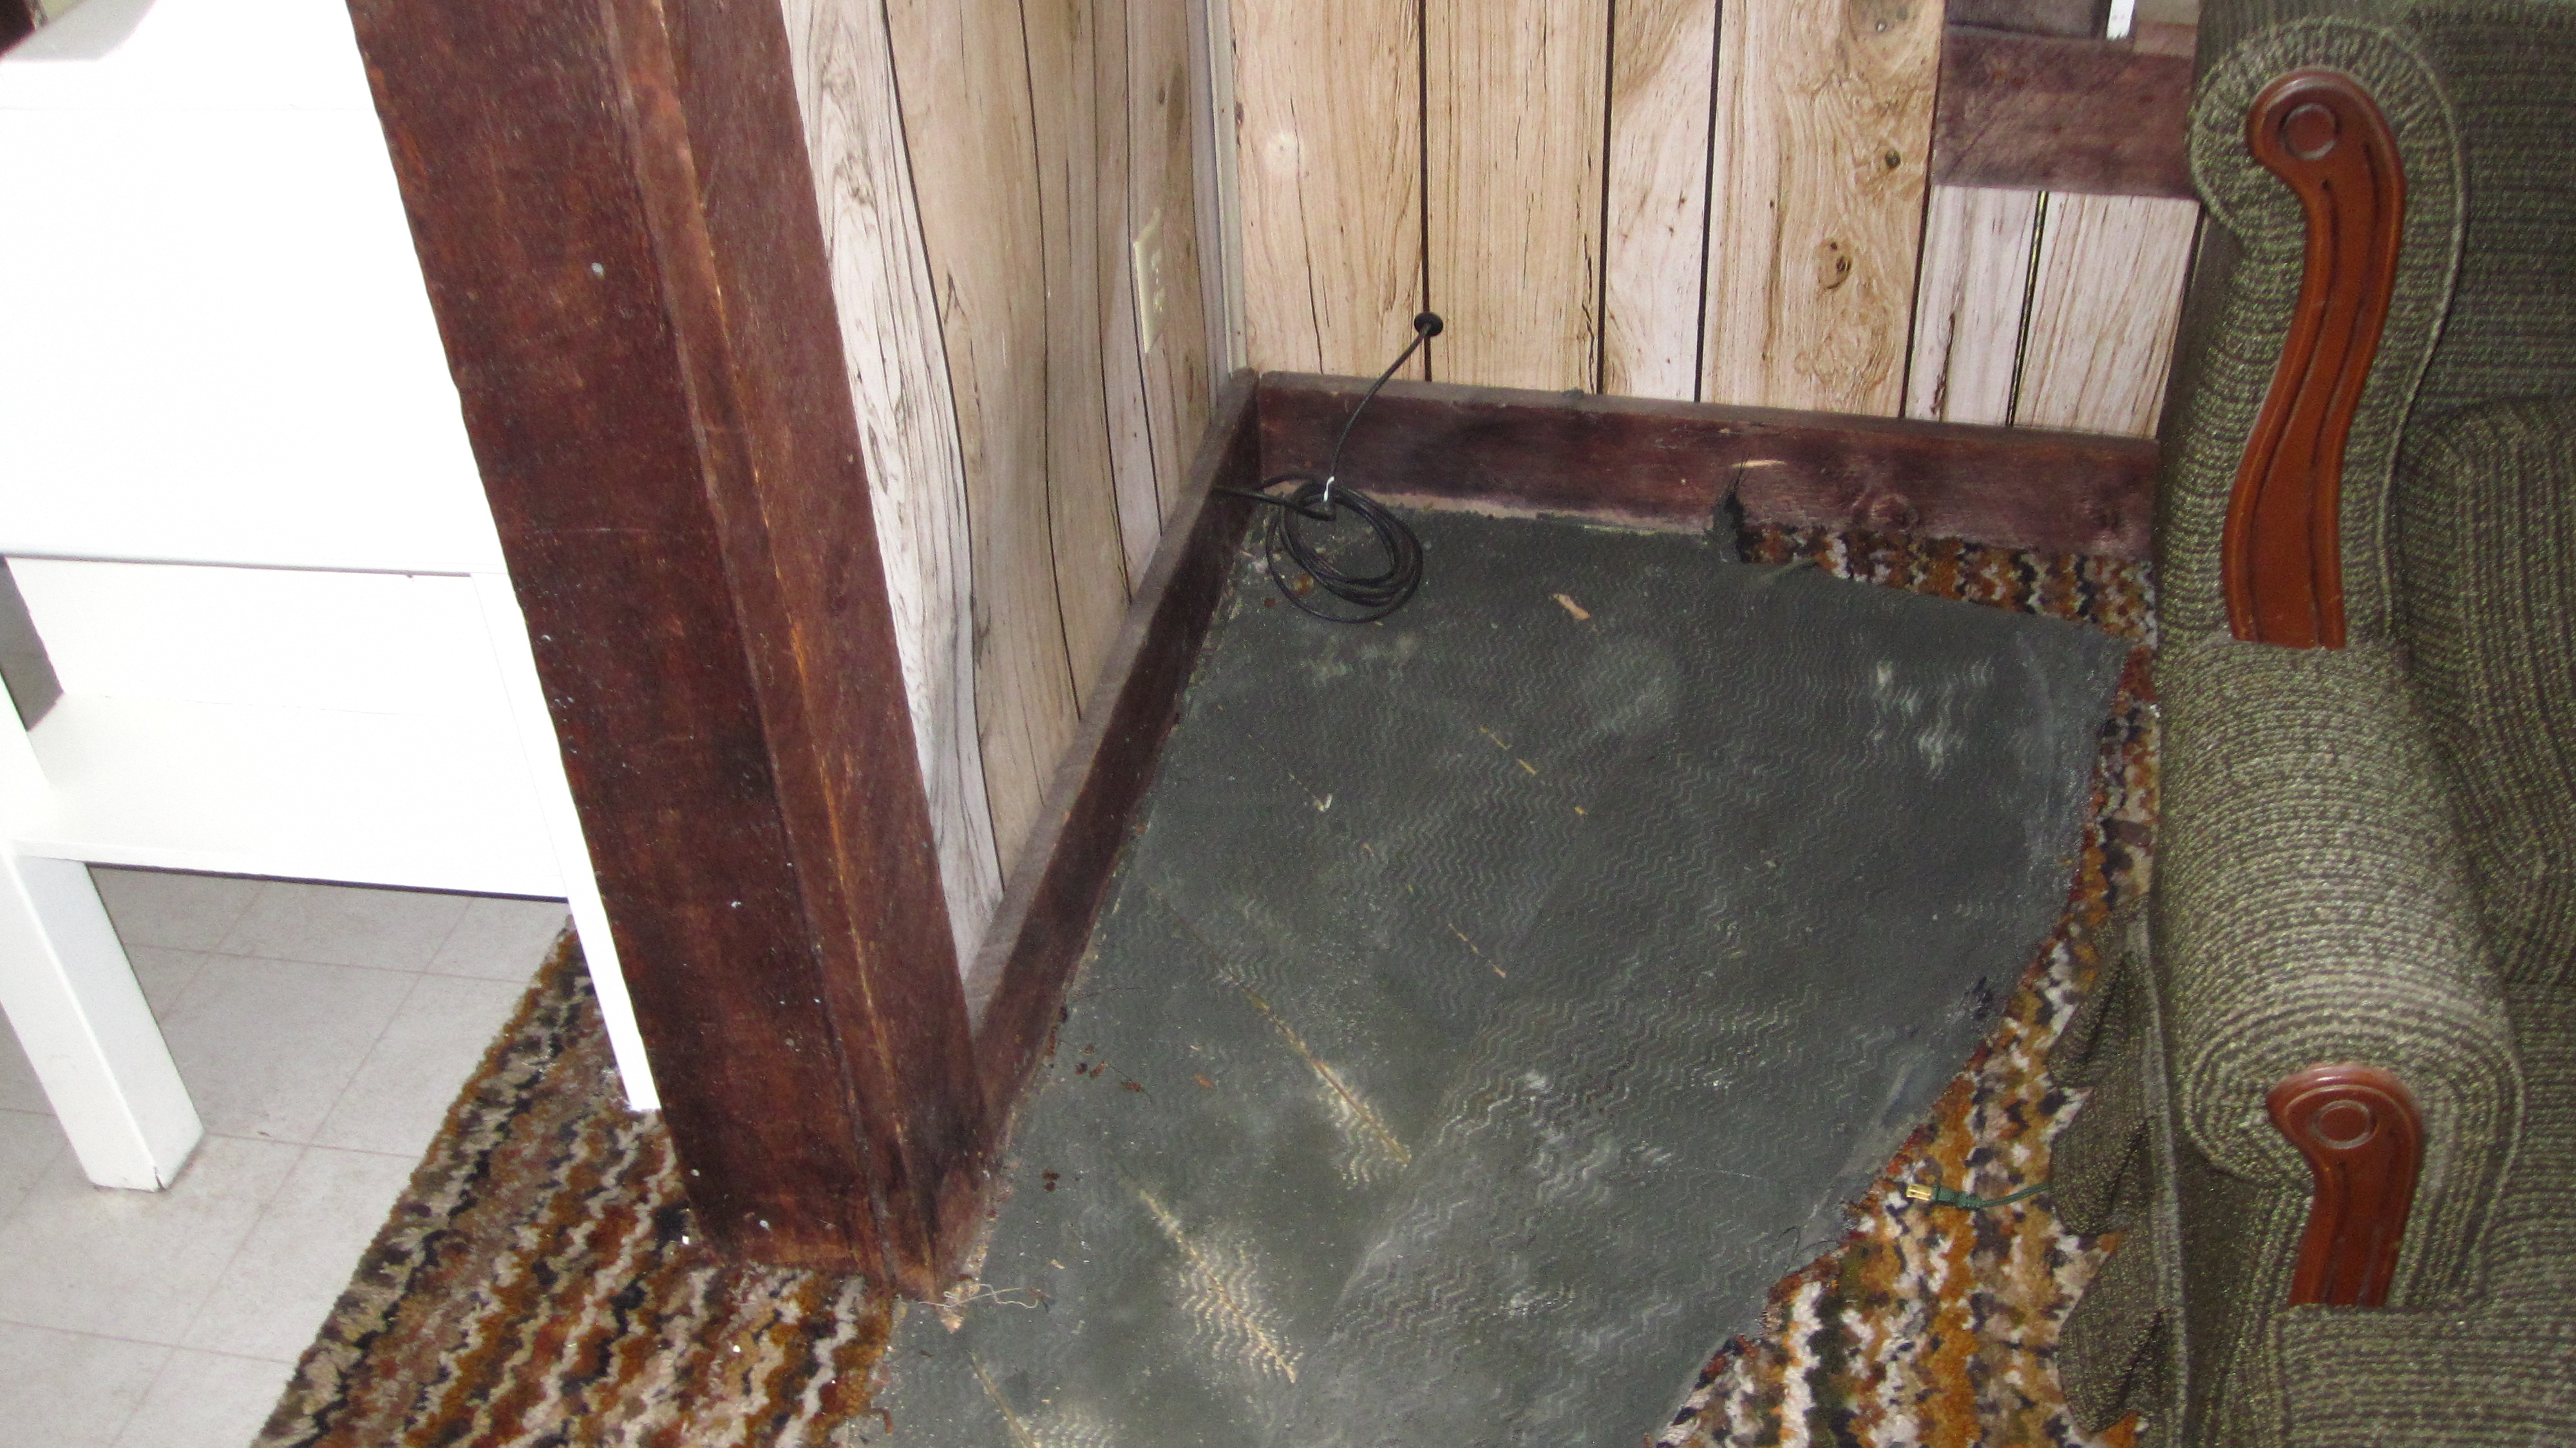 https://thegirlwithahammer.files.wordpress.com/2013/12/floor-removal-2-old-carpet-padding-stuck-to-the-boards.jpg